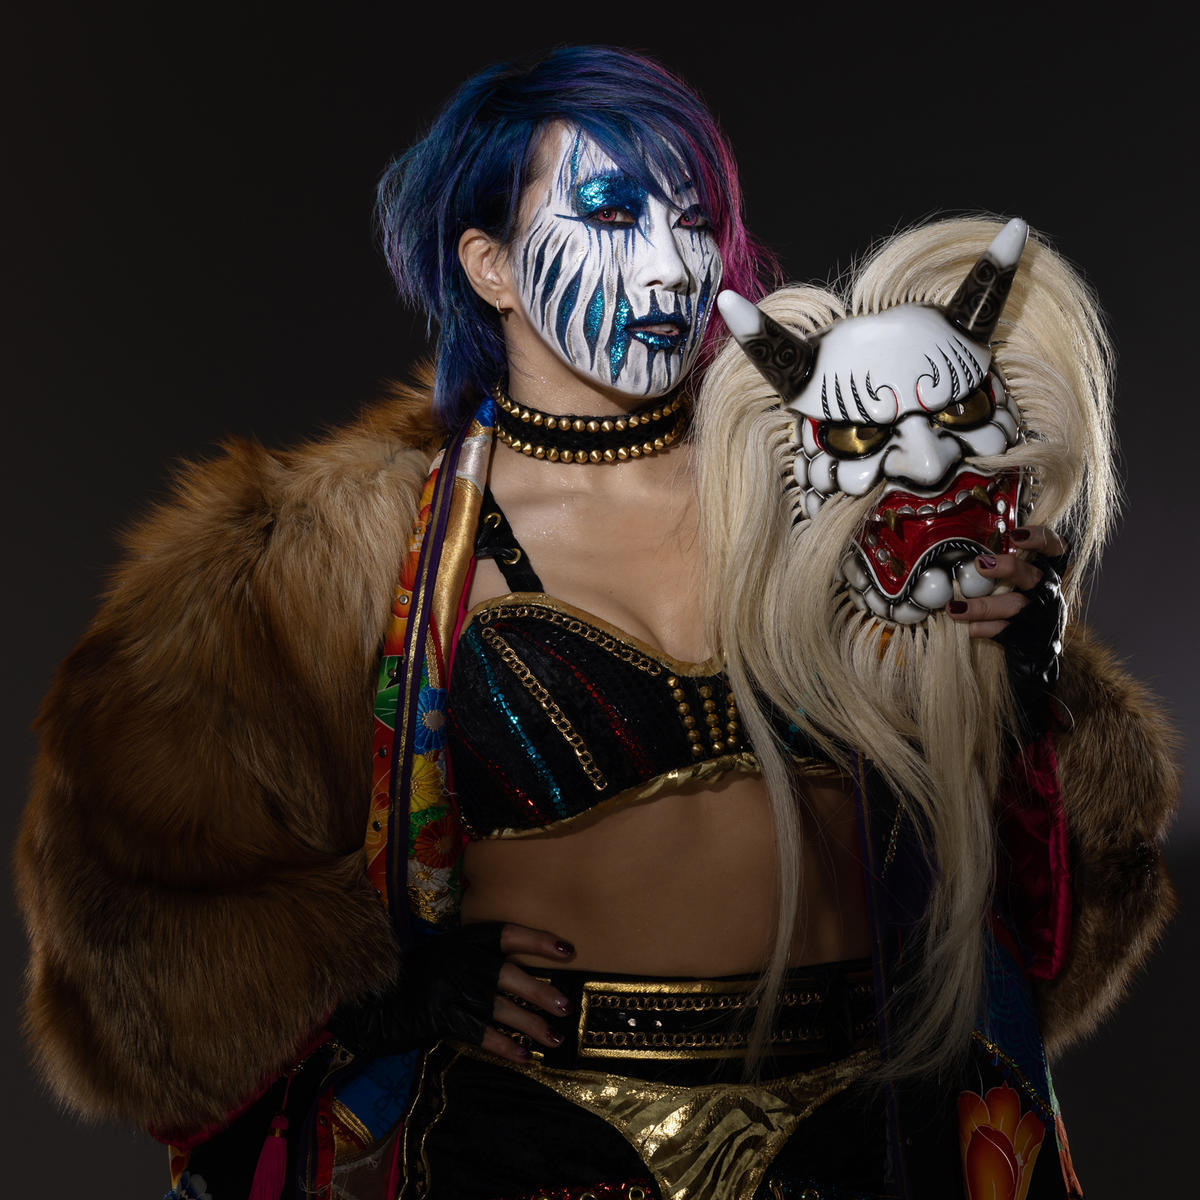 You will forever be one of my favorite teams @WWEAsuka @KAIRI_official
#KabukiWarriors